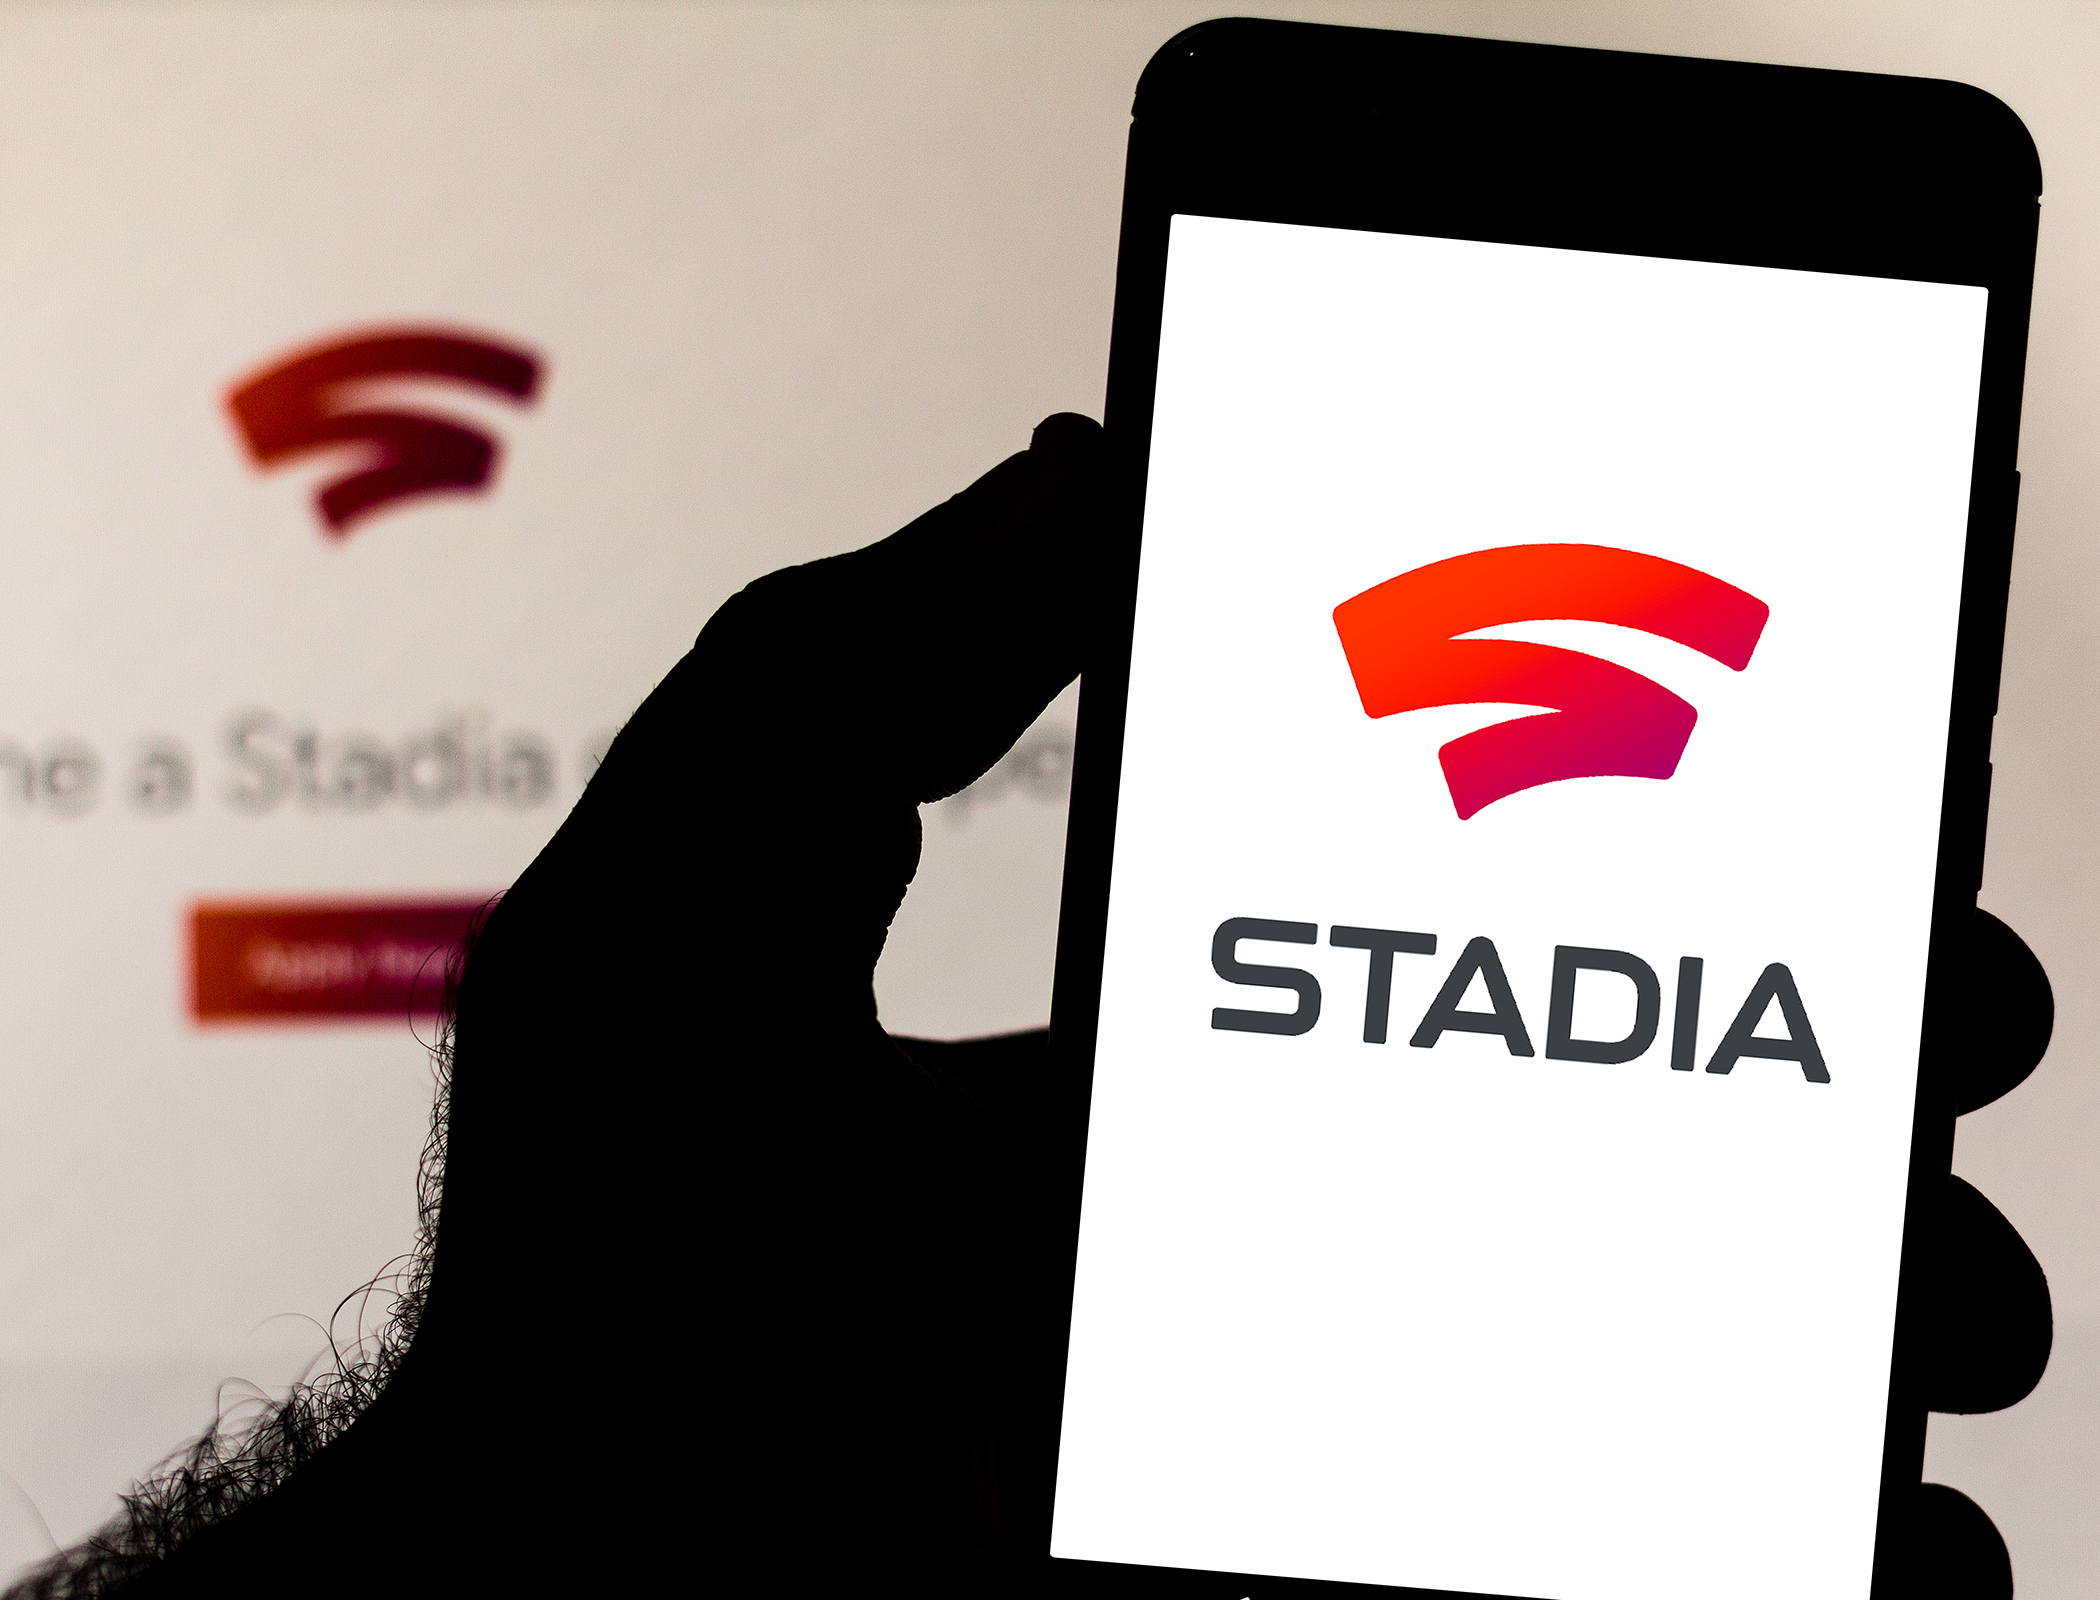 Google shutting down Stadia gaming platform after just three years